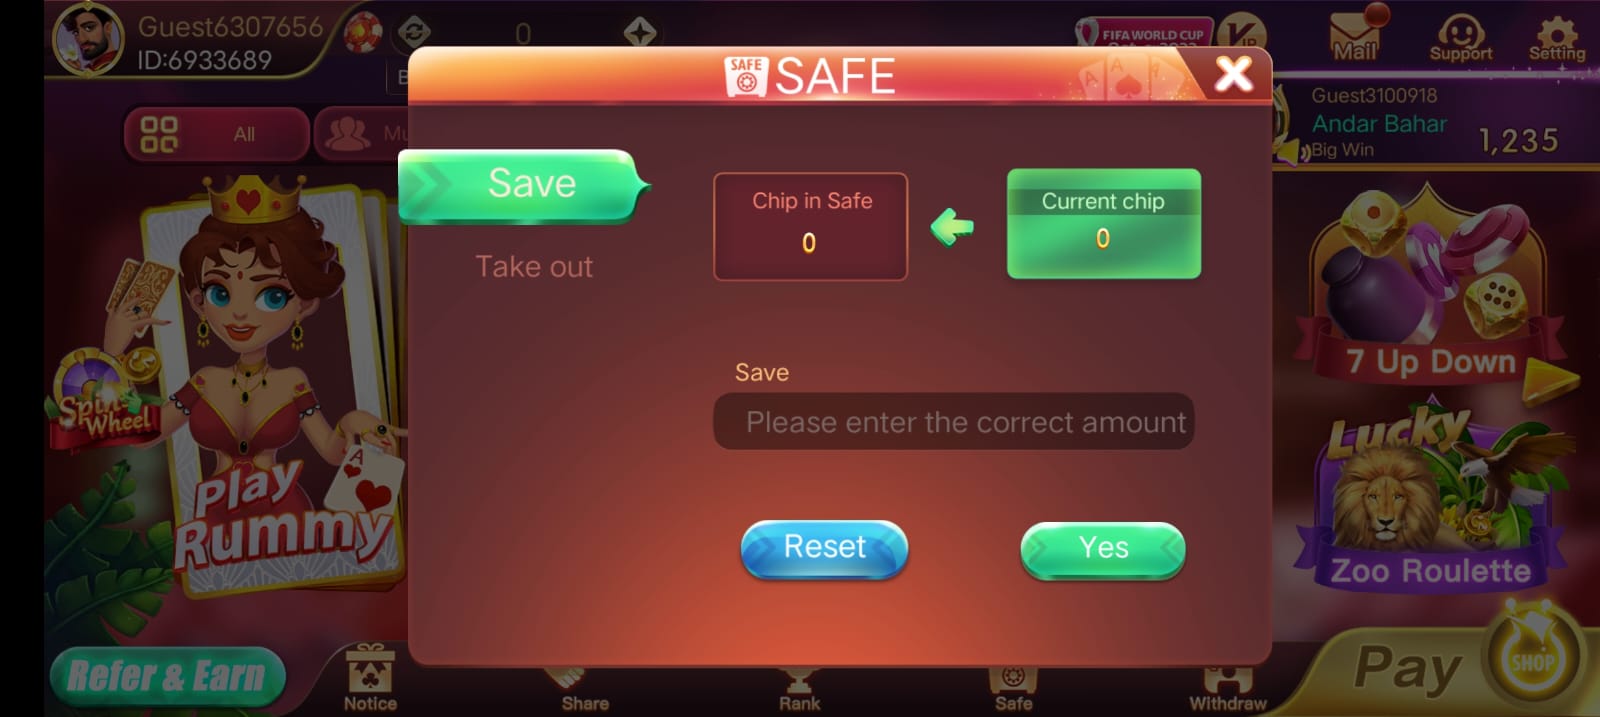 Safe Option In Rummy Loot App